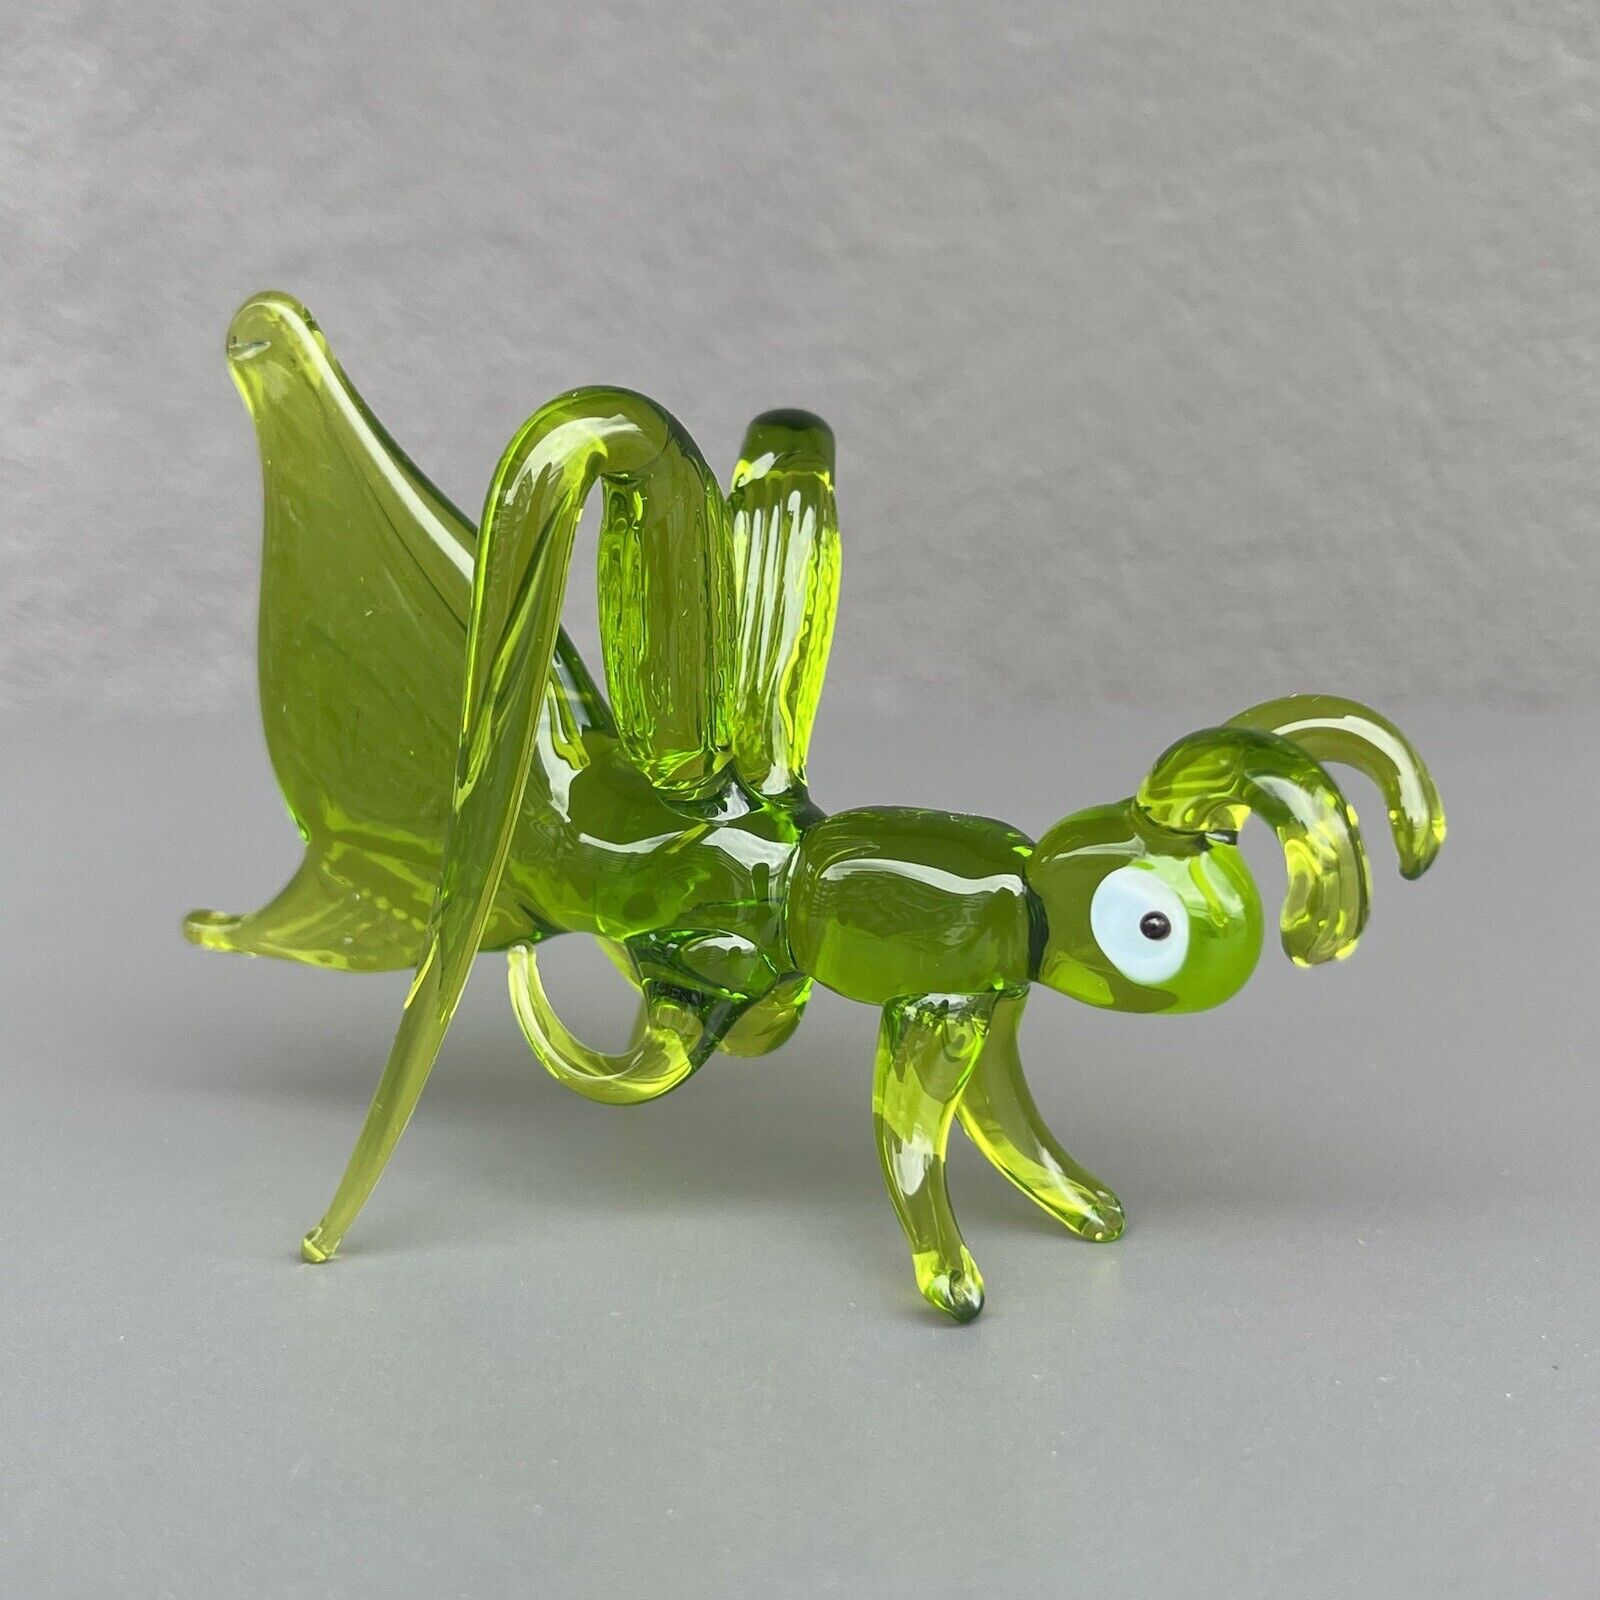 4.5” Glass Grasshopper Figurine - Collectible Glass Animal Grasshopper Sculpture